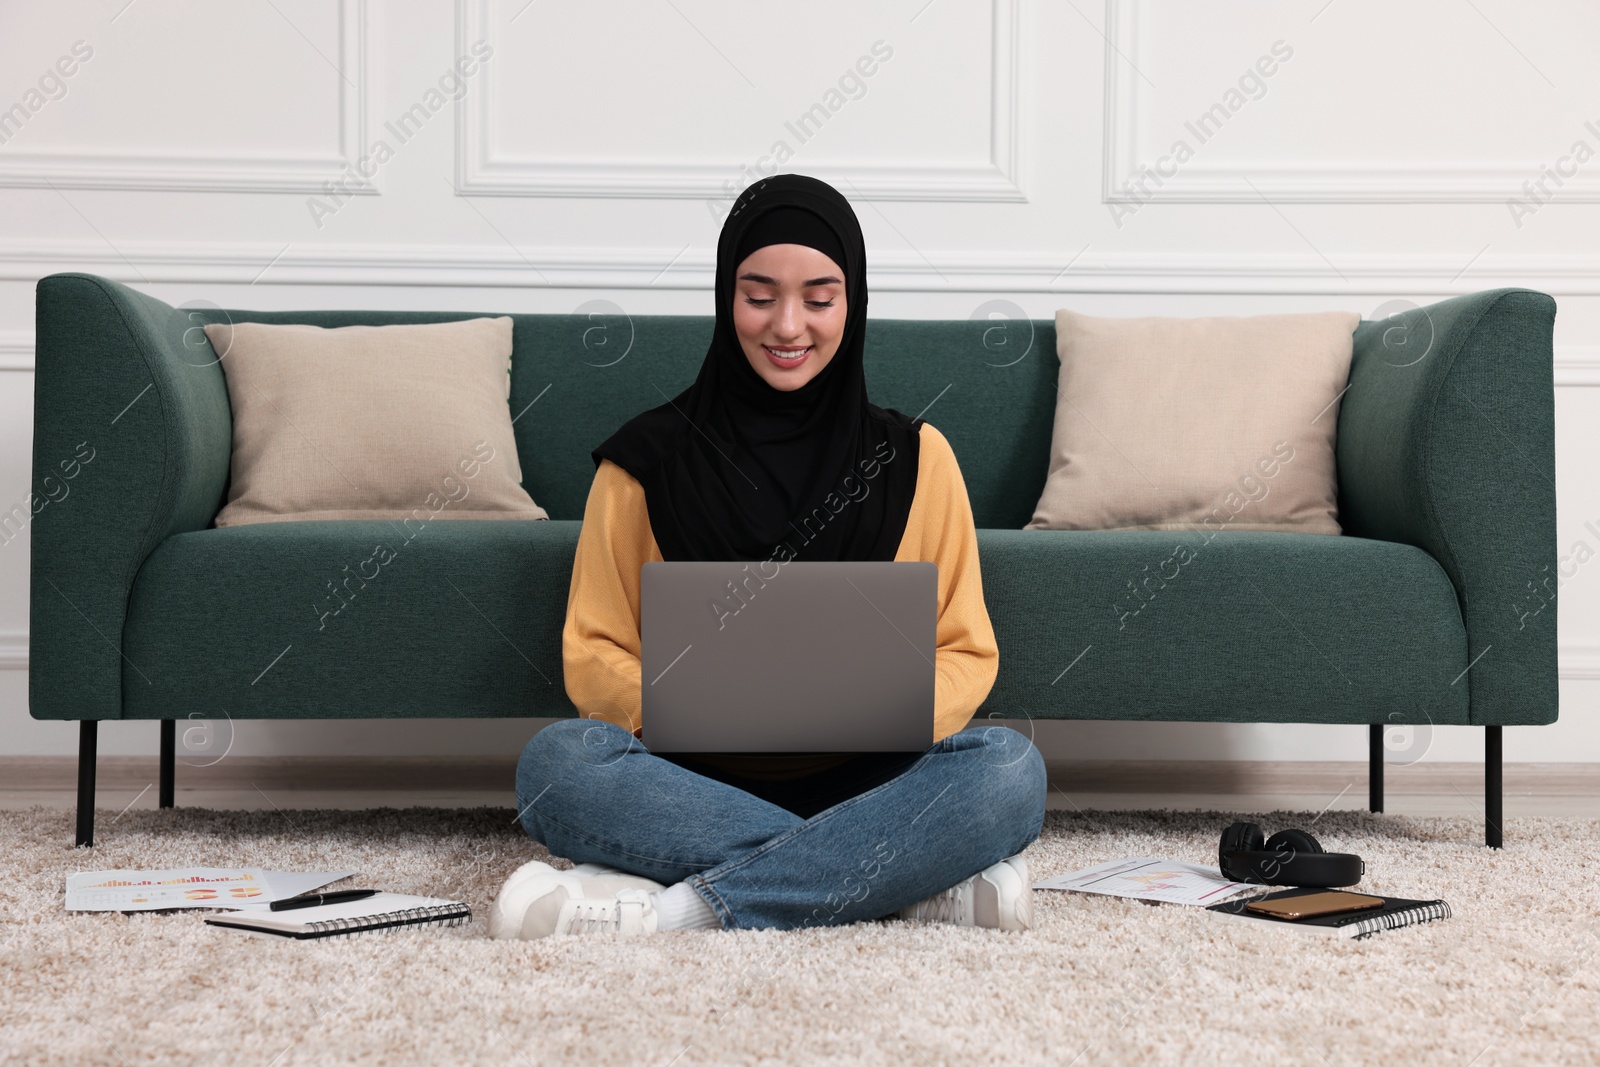 Photo of Muslim woman in hijab using laptop on floor near sofa indoors